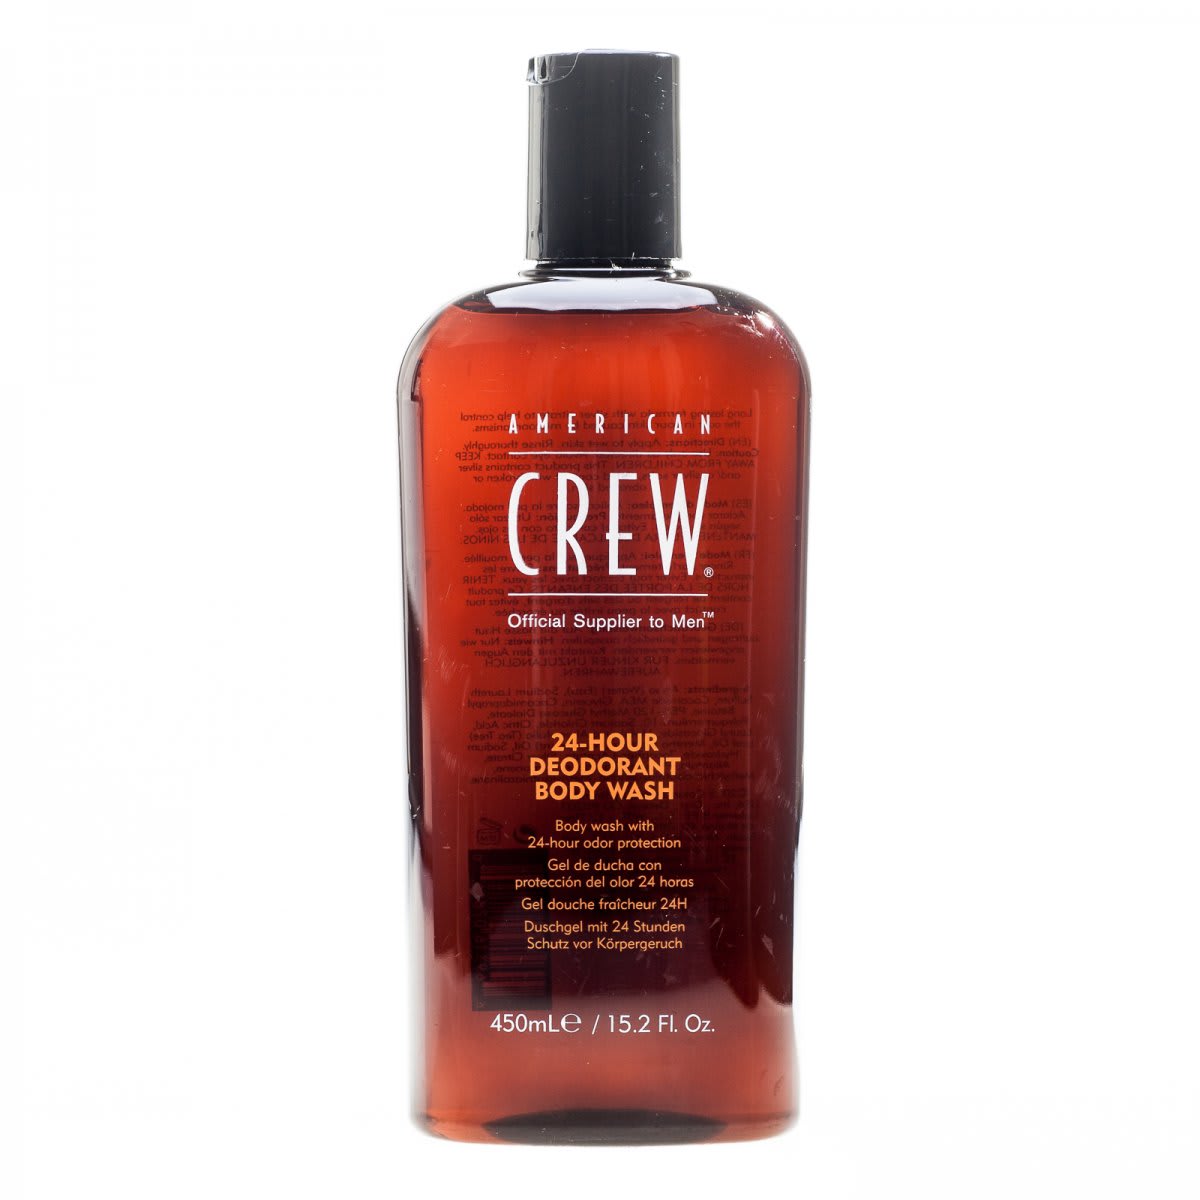 American Crew 24-hour Deodorant Body Wash